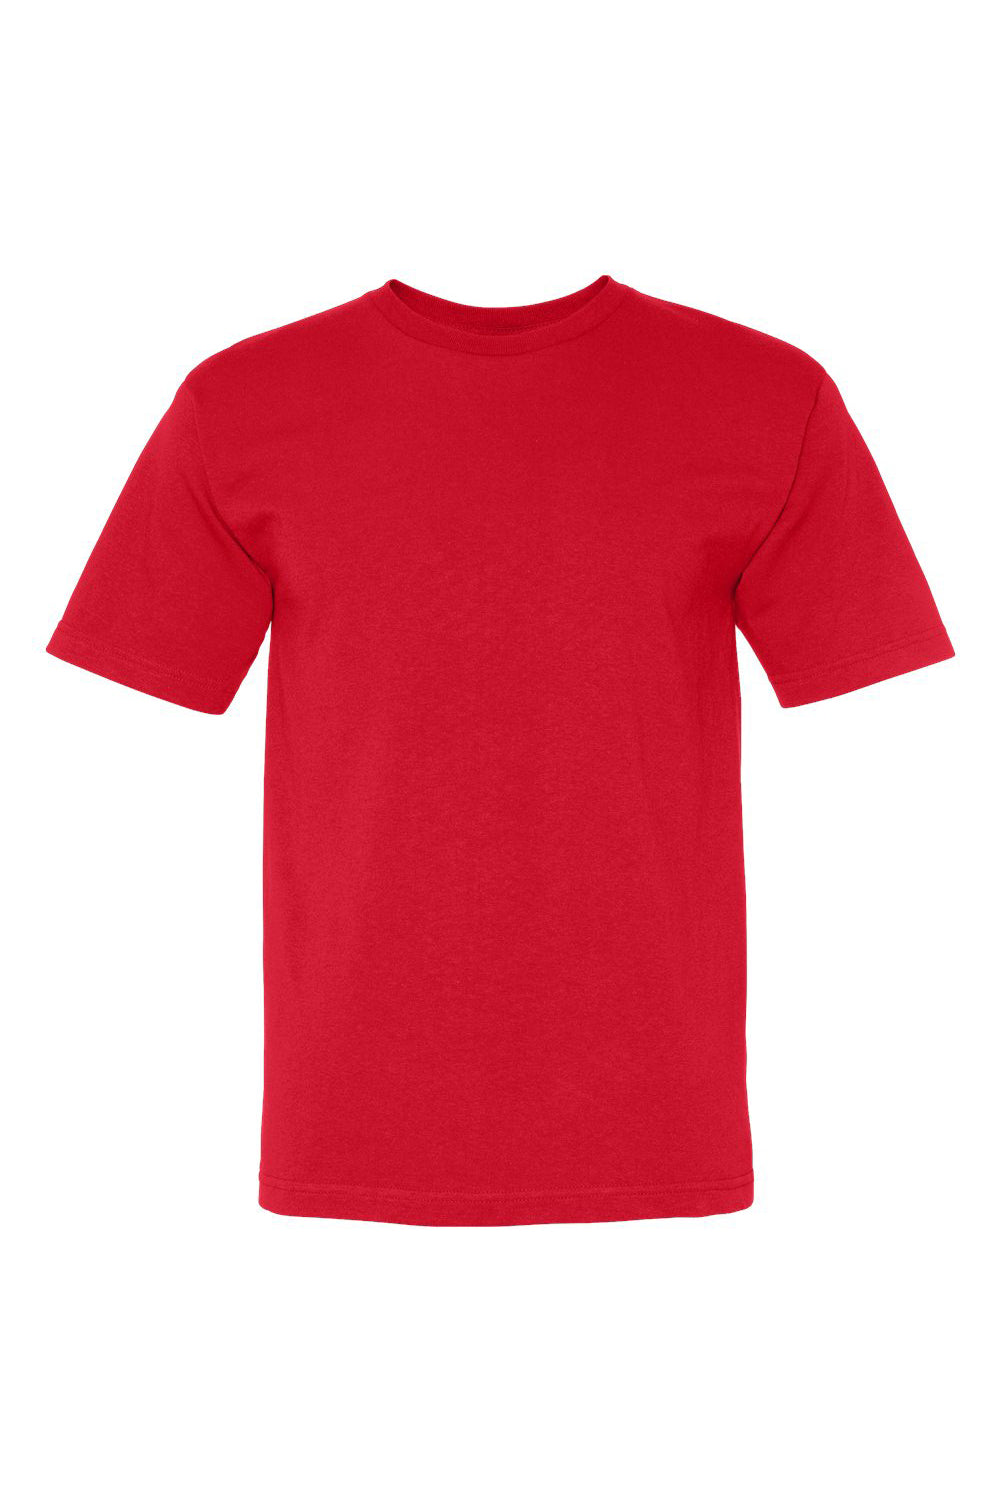 Bayside BA5040 Mens USA Made Short Sleeve Crewneck T-Shirt Red Flat Front